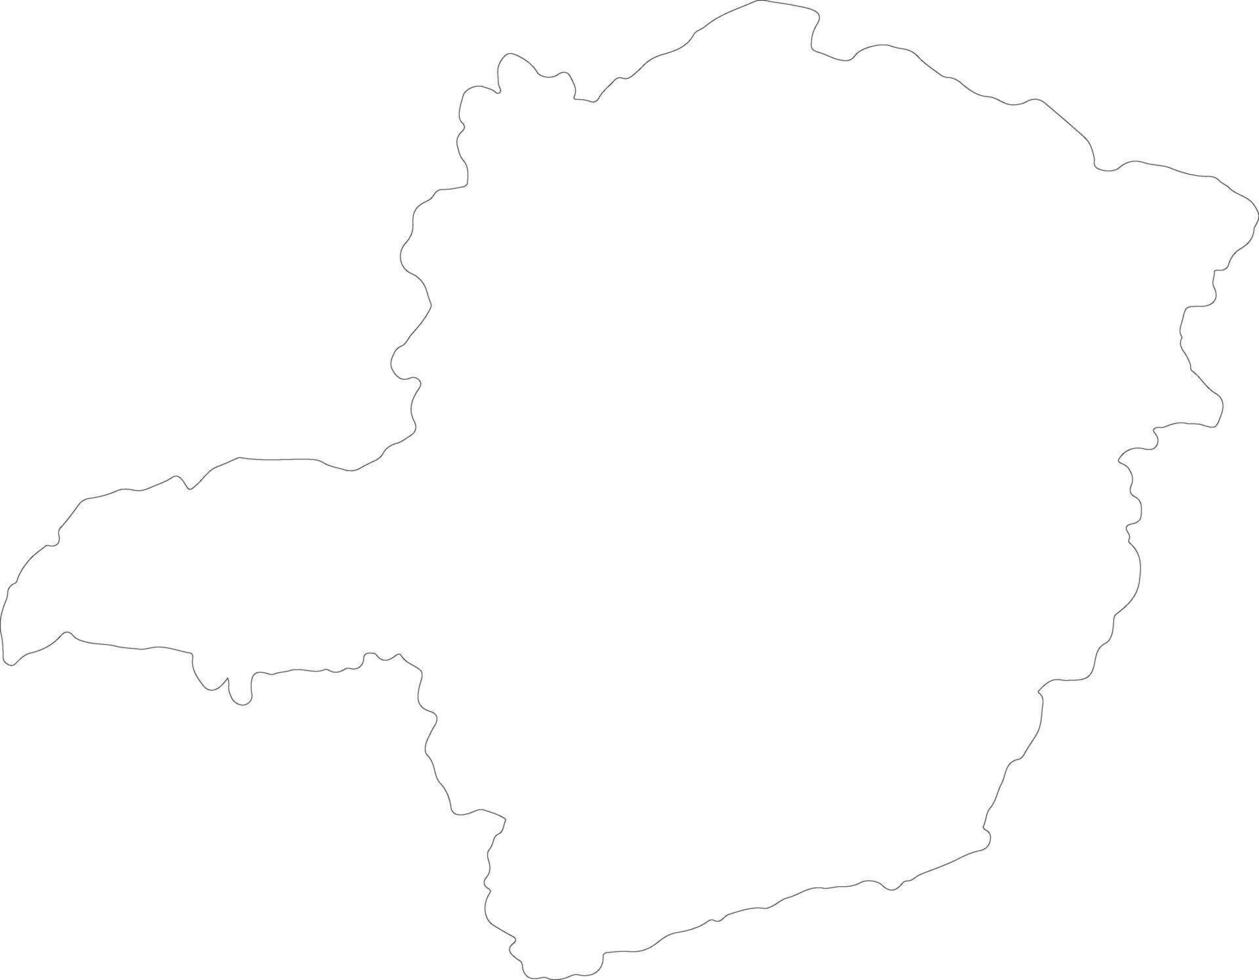 Minas Gerais Brazil outline map vector